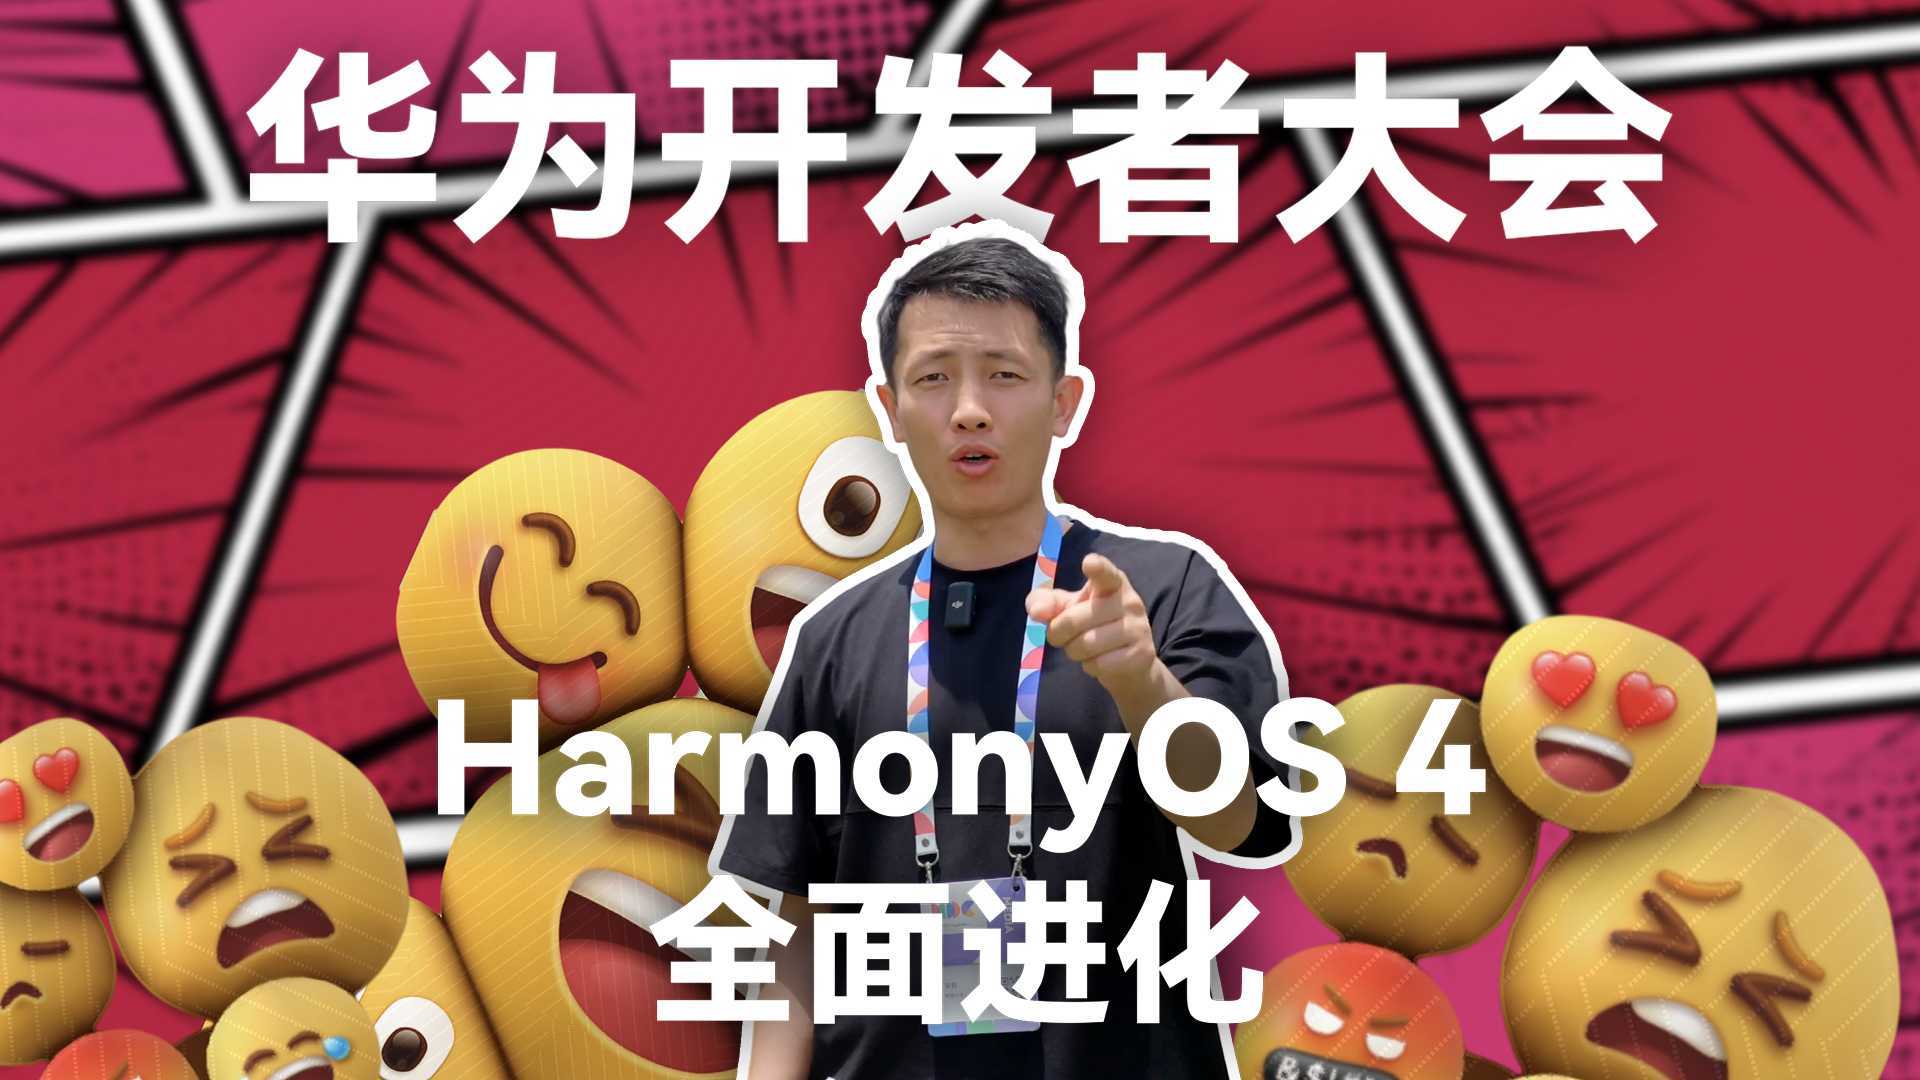 HarmonyOS 4 体验最强智慧助手